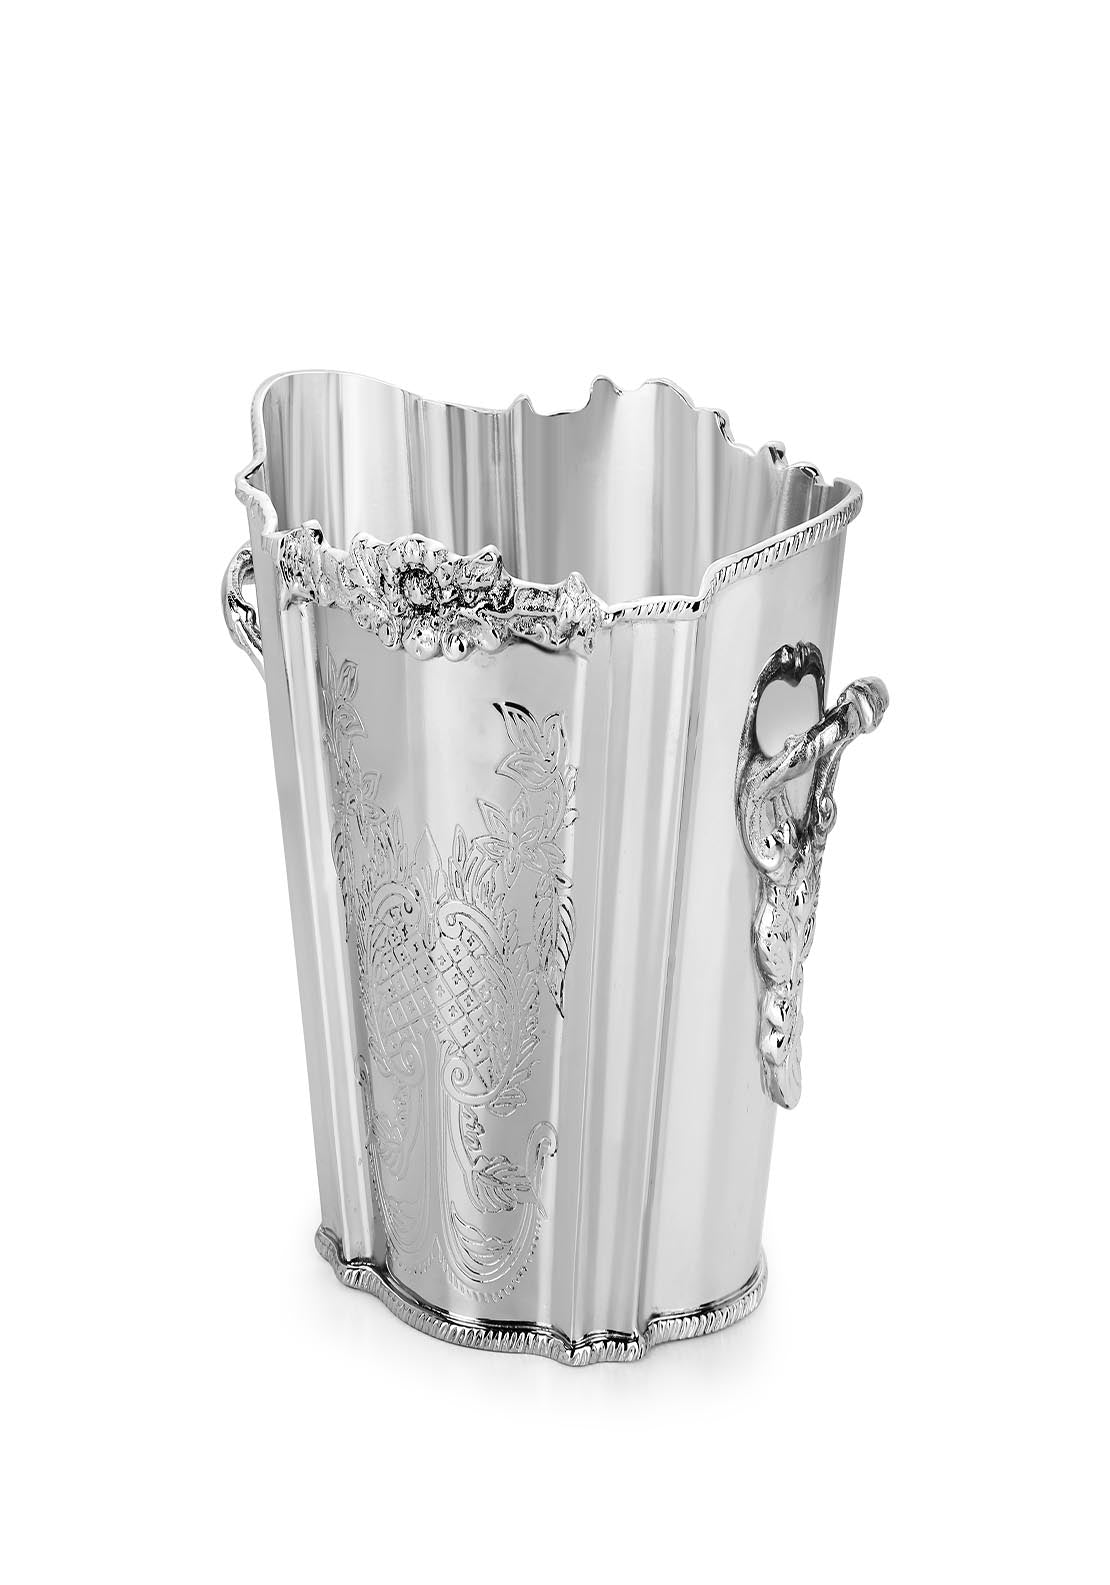 Newbridge Silverware Ornate Ice Bucket 1 Shaws Department Stores